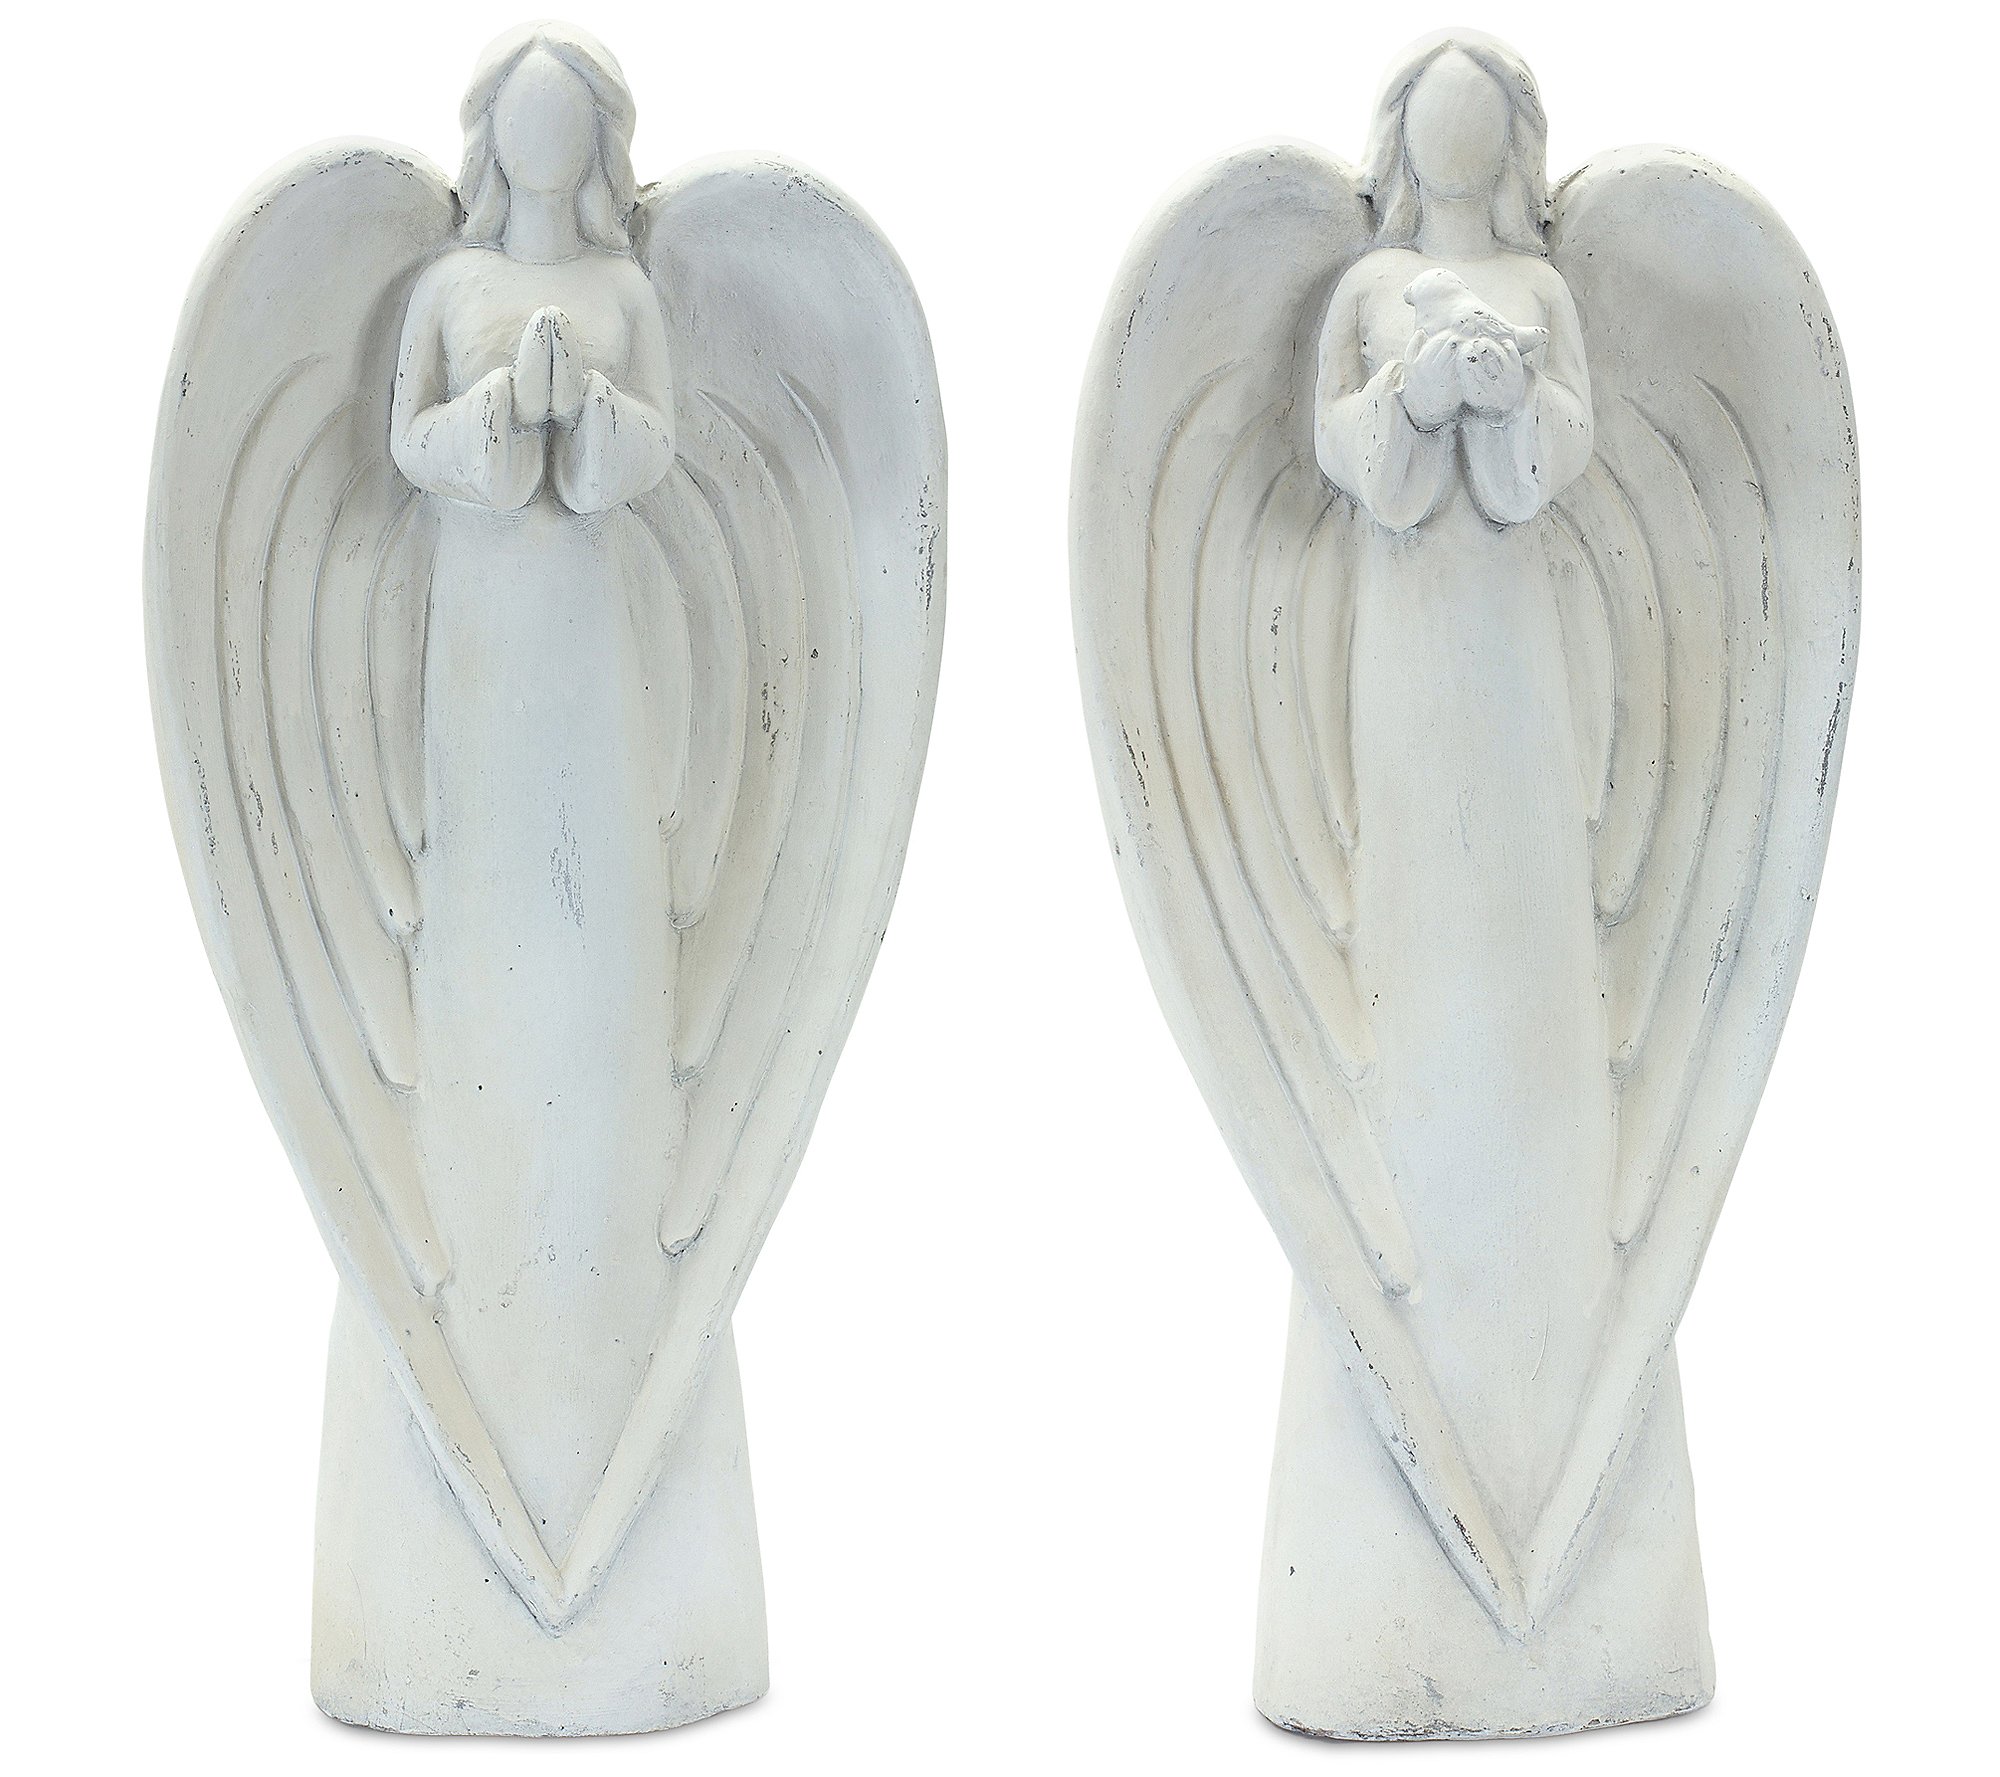 Melrose Garden Angel Statue with Bird Accent (S et of 2)